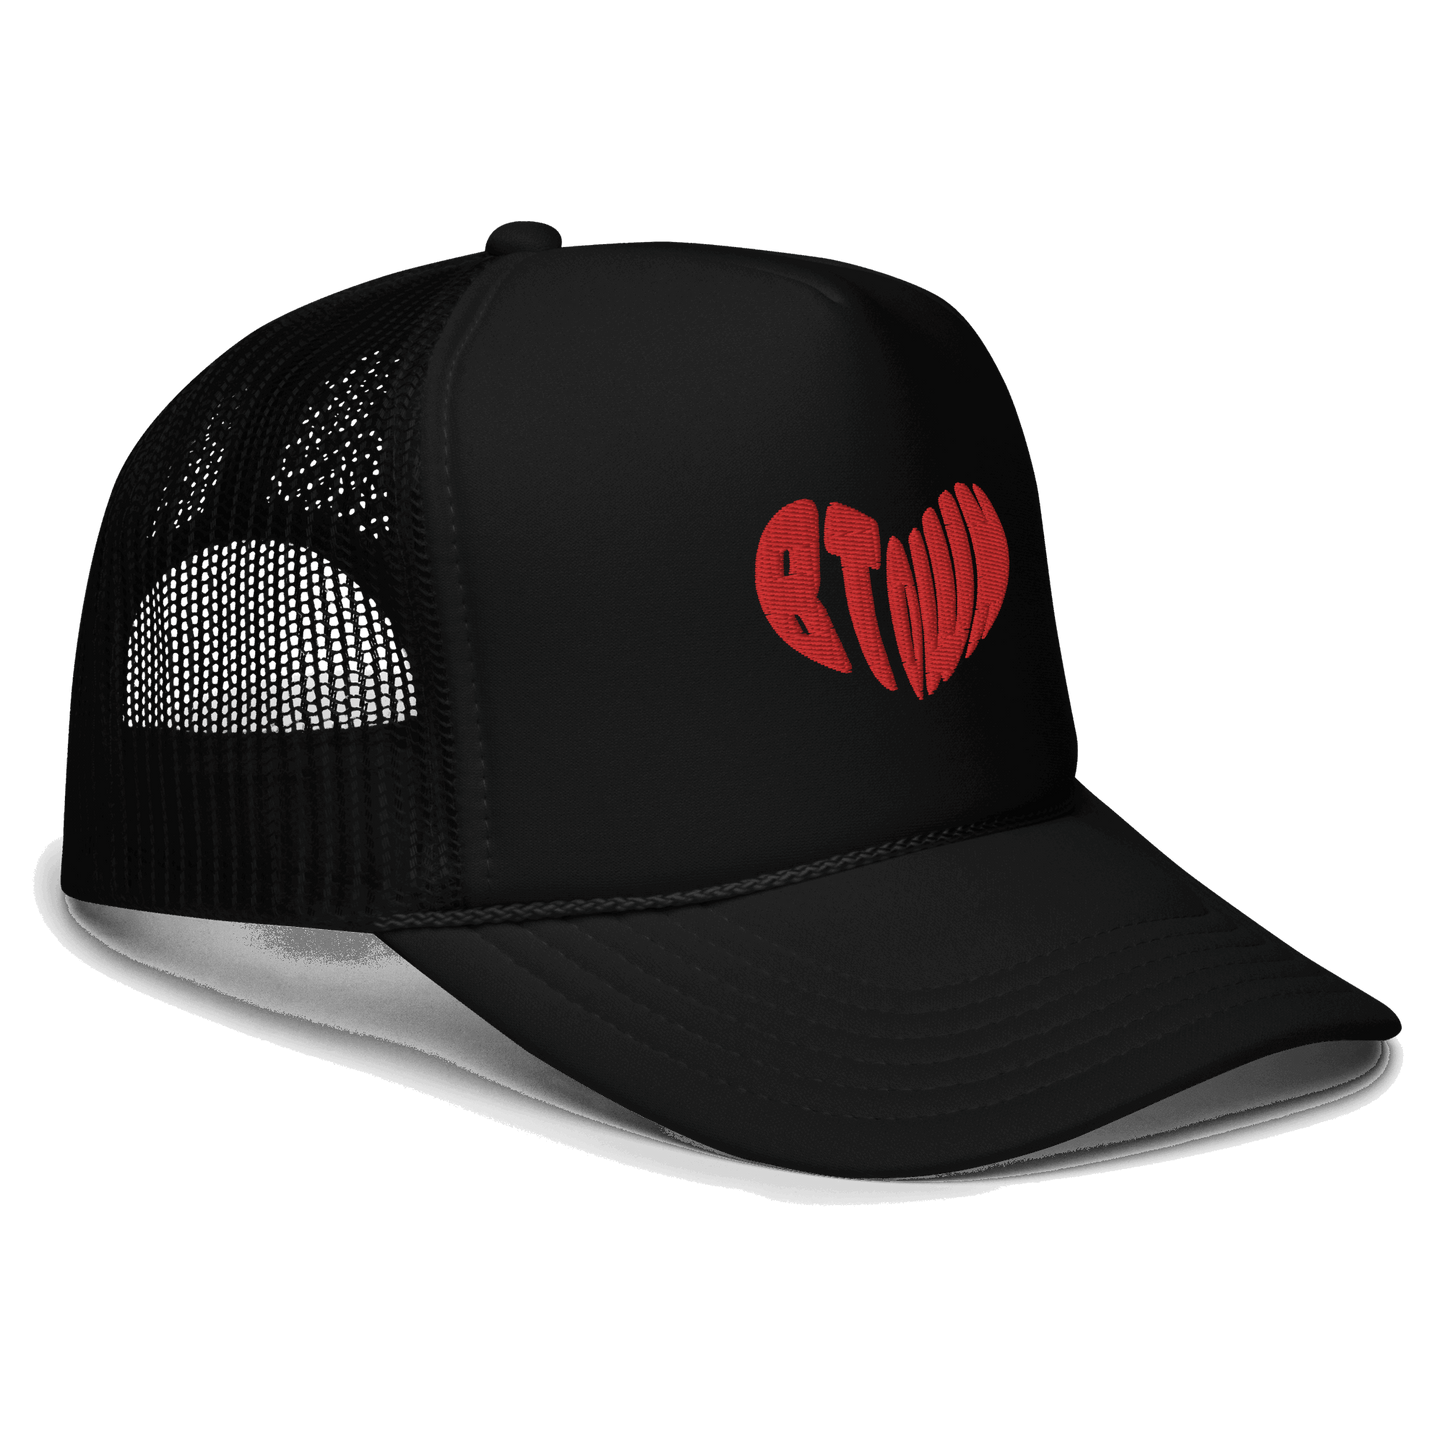 BTown Heart Trucker Hat